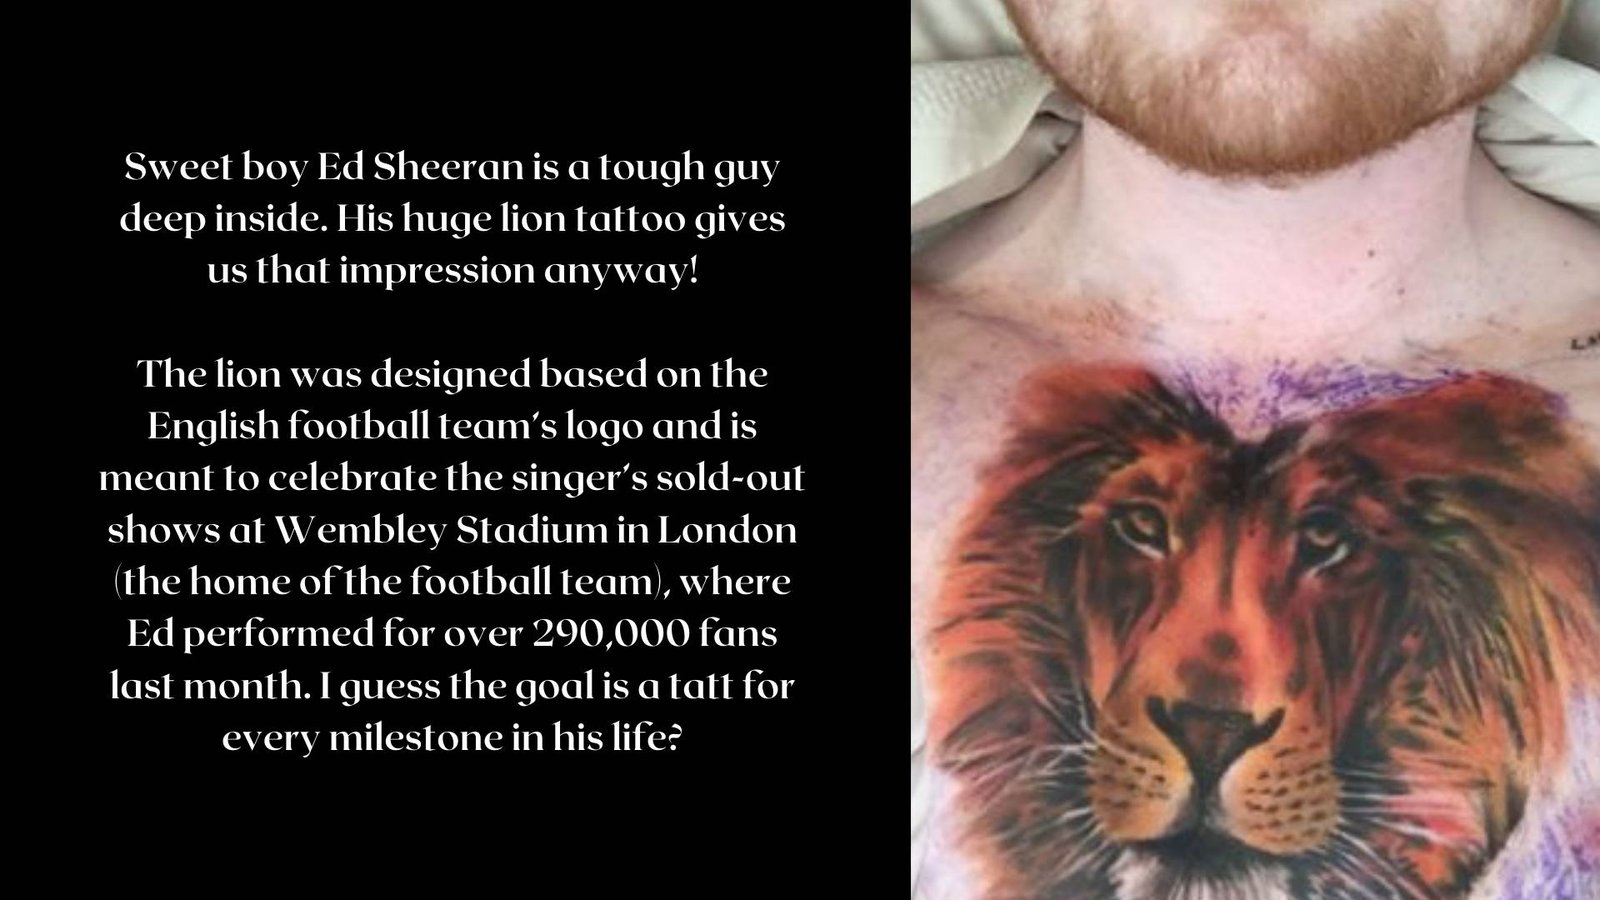 Ed Sheeran’s Tattoos & Their Meanings